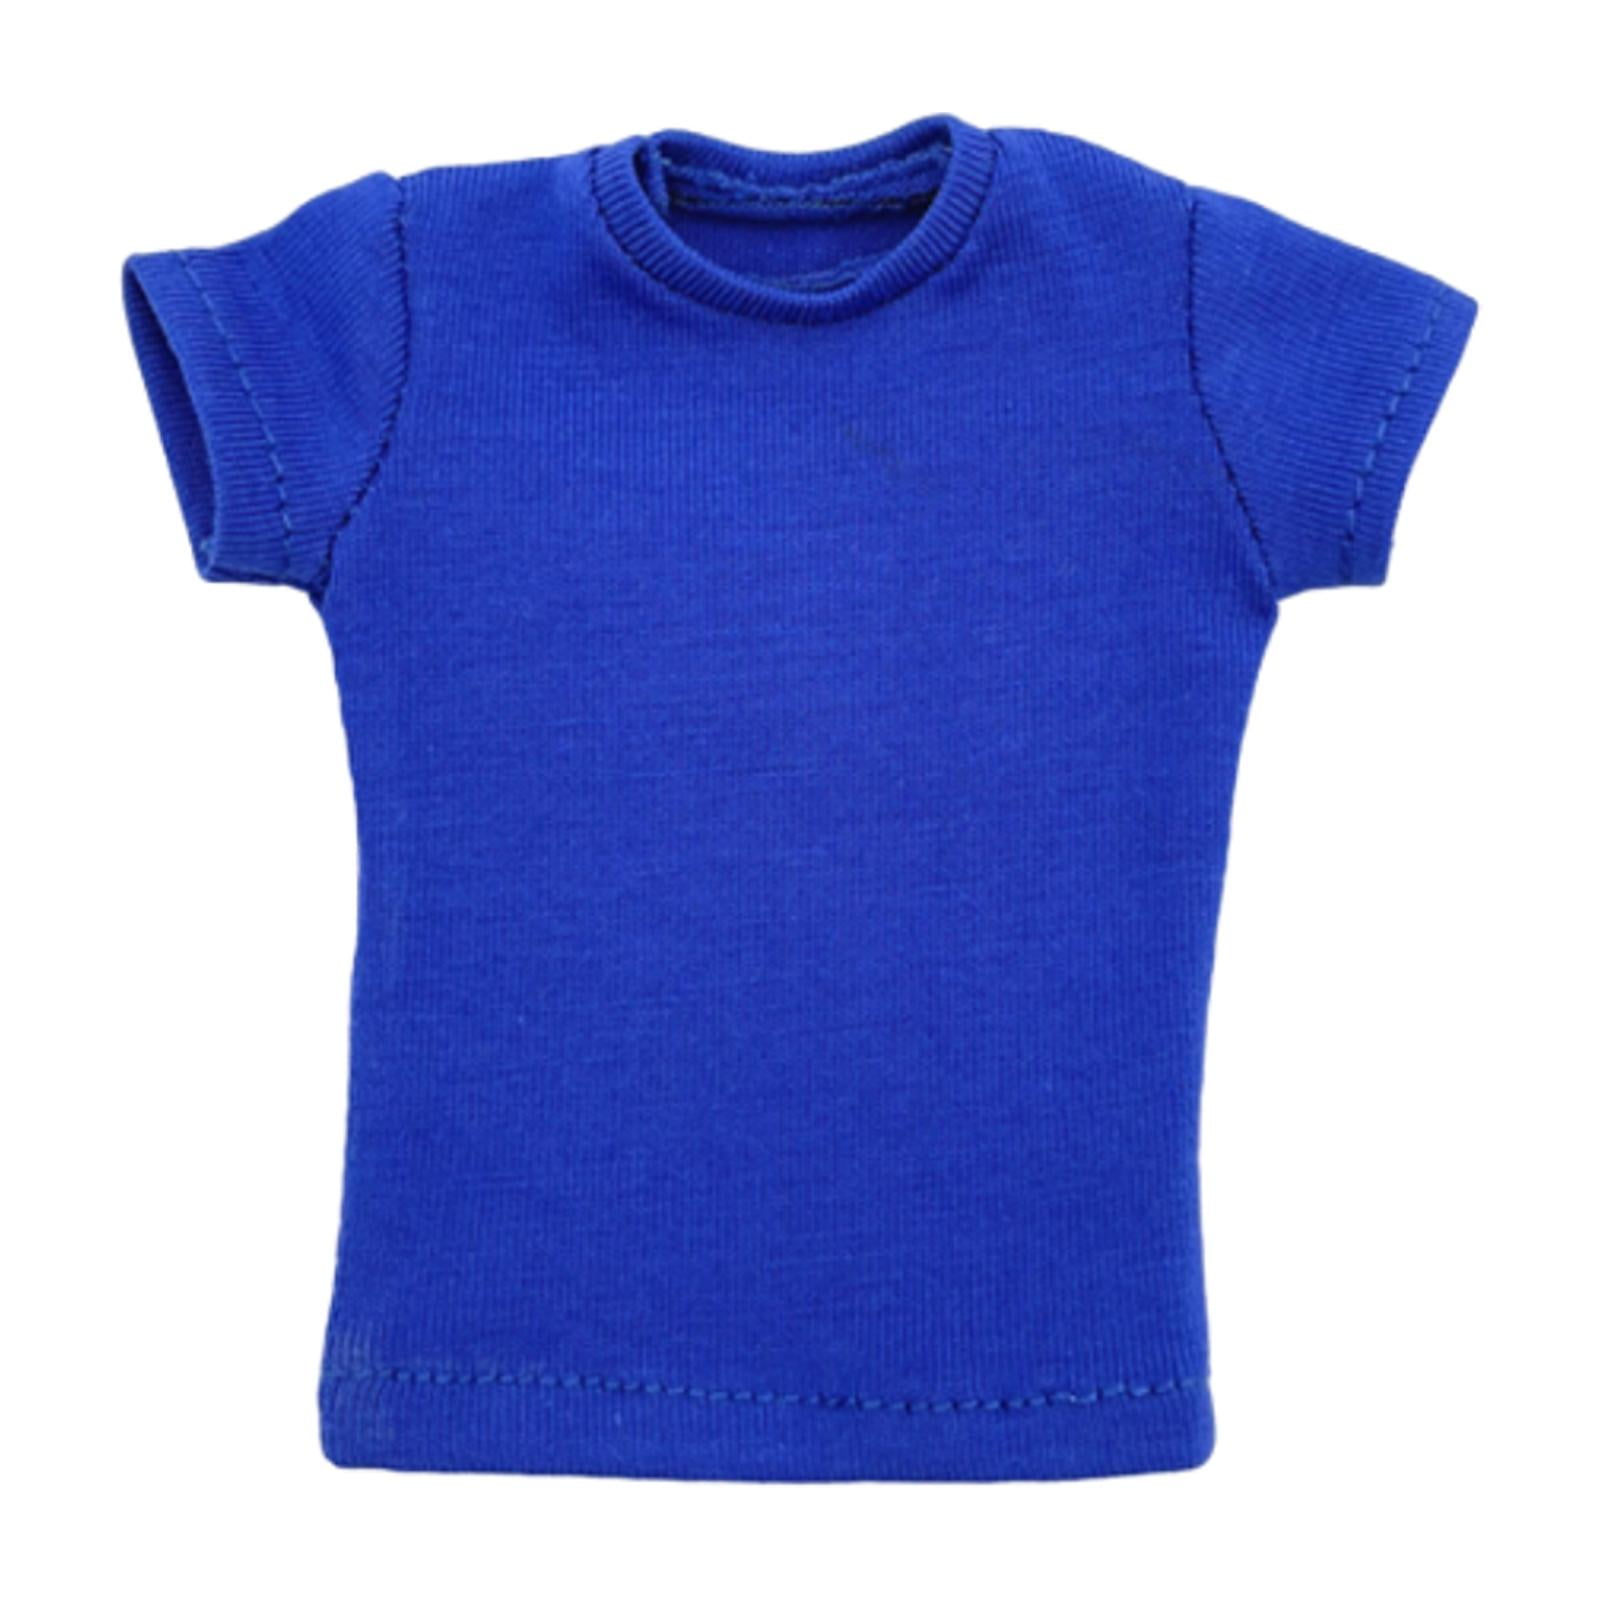 Fashion 1:12 Miniature Shirt Doll Clothes, 12 Inches Action Figures Dress Up Accs Blue Walmart.com